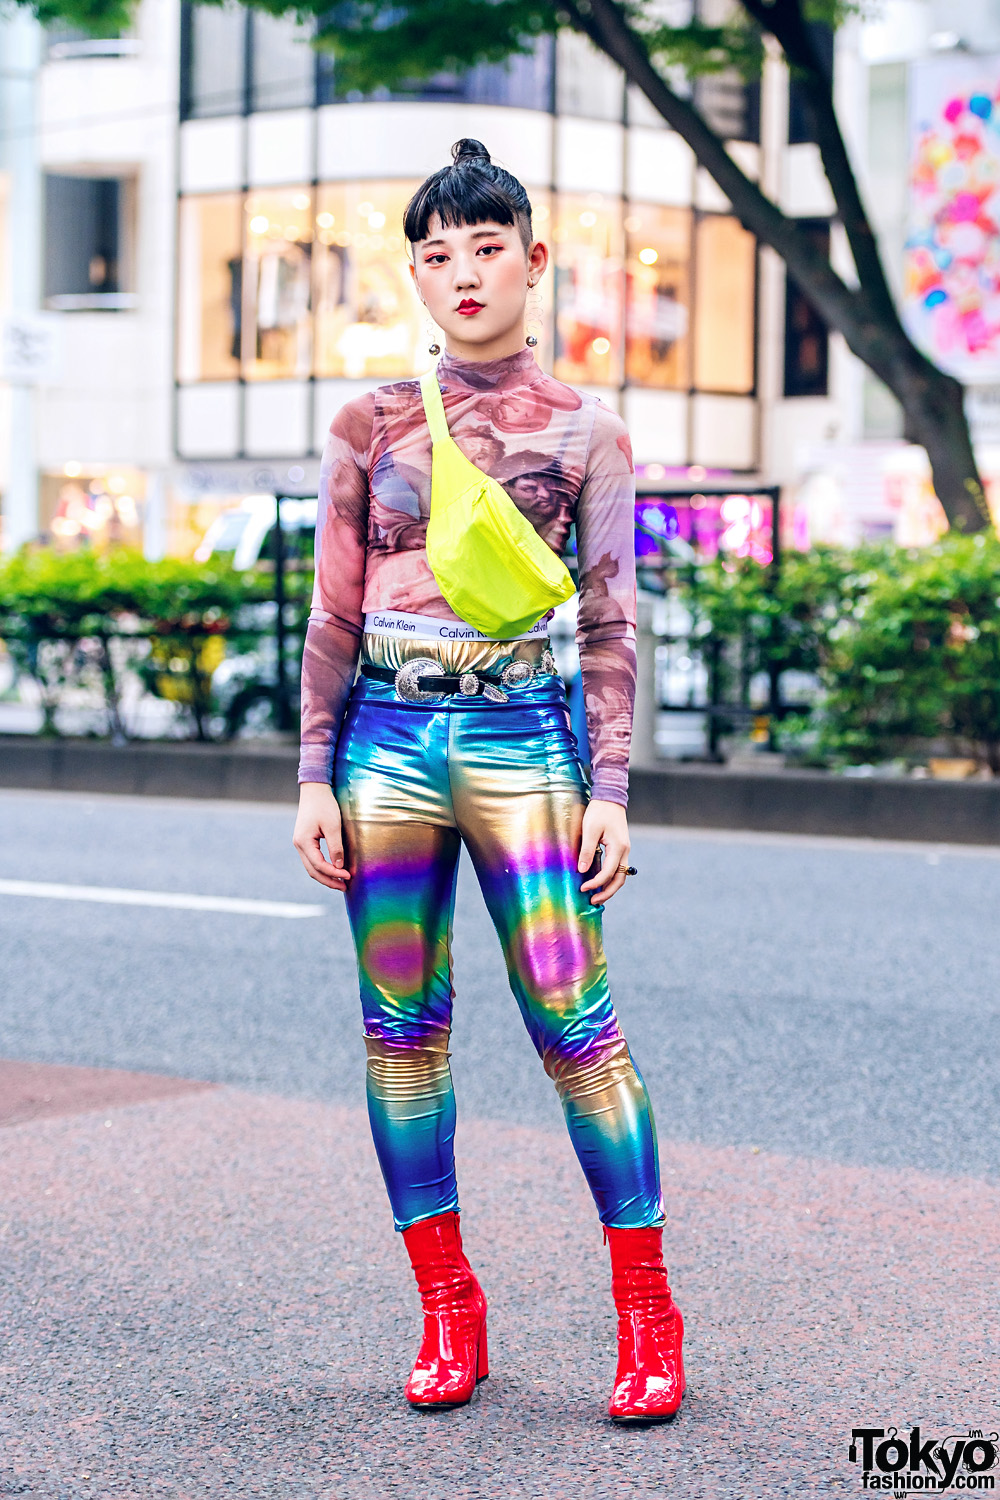 Harajuku Girl w/ Nodress Graphic Top, Metallic Pants, Neon Yellow Bag & Red Boots